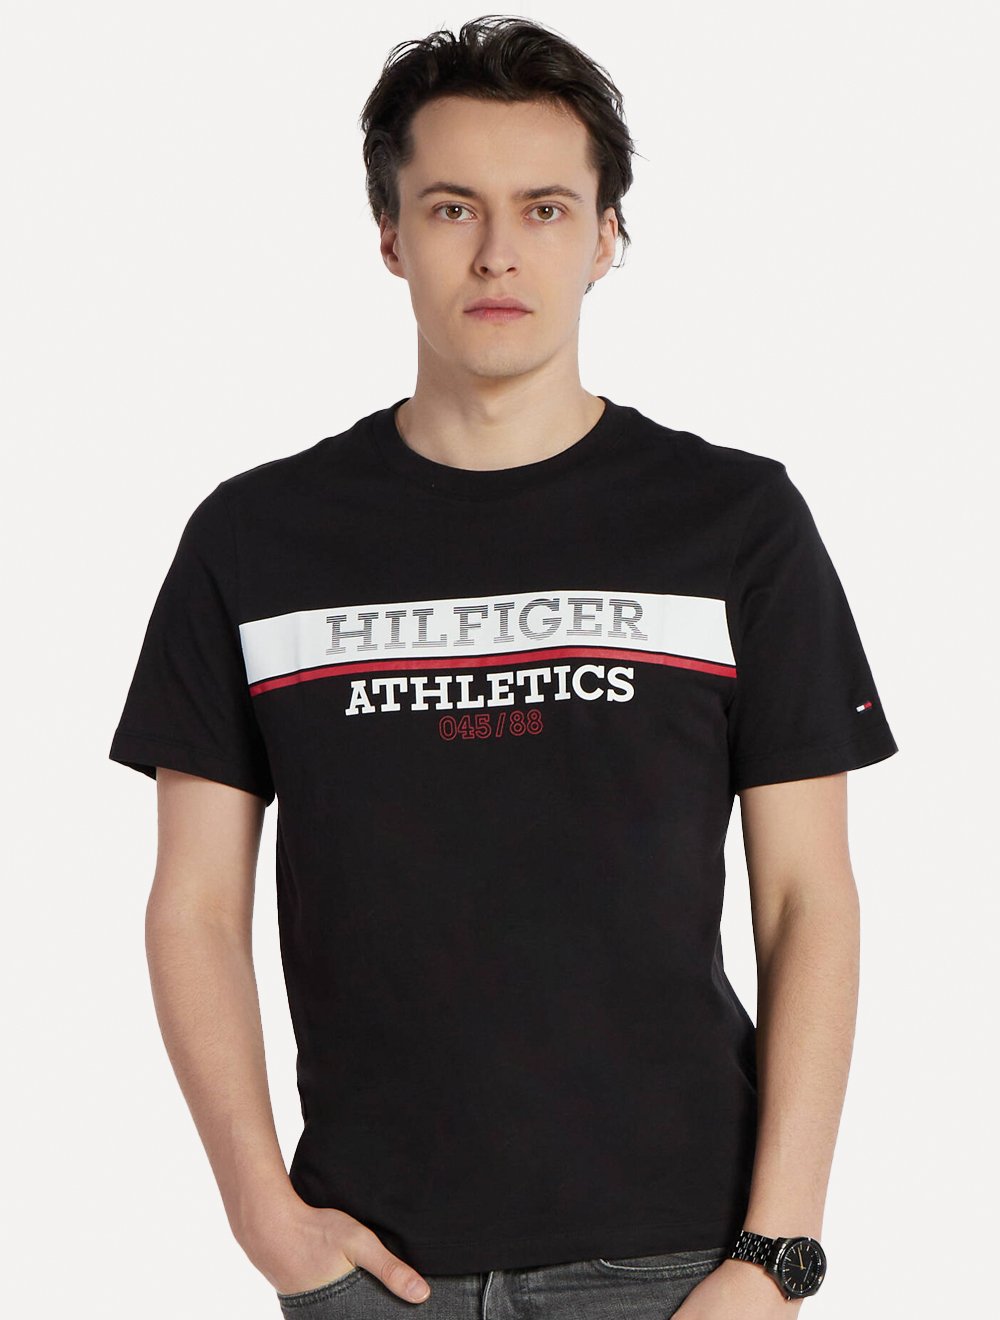 Camiseta Tommy Hilfiger Masculina Athletics 045/88 Preta